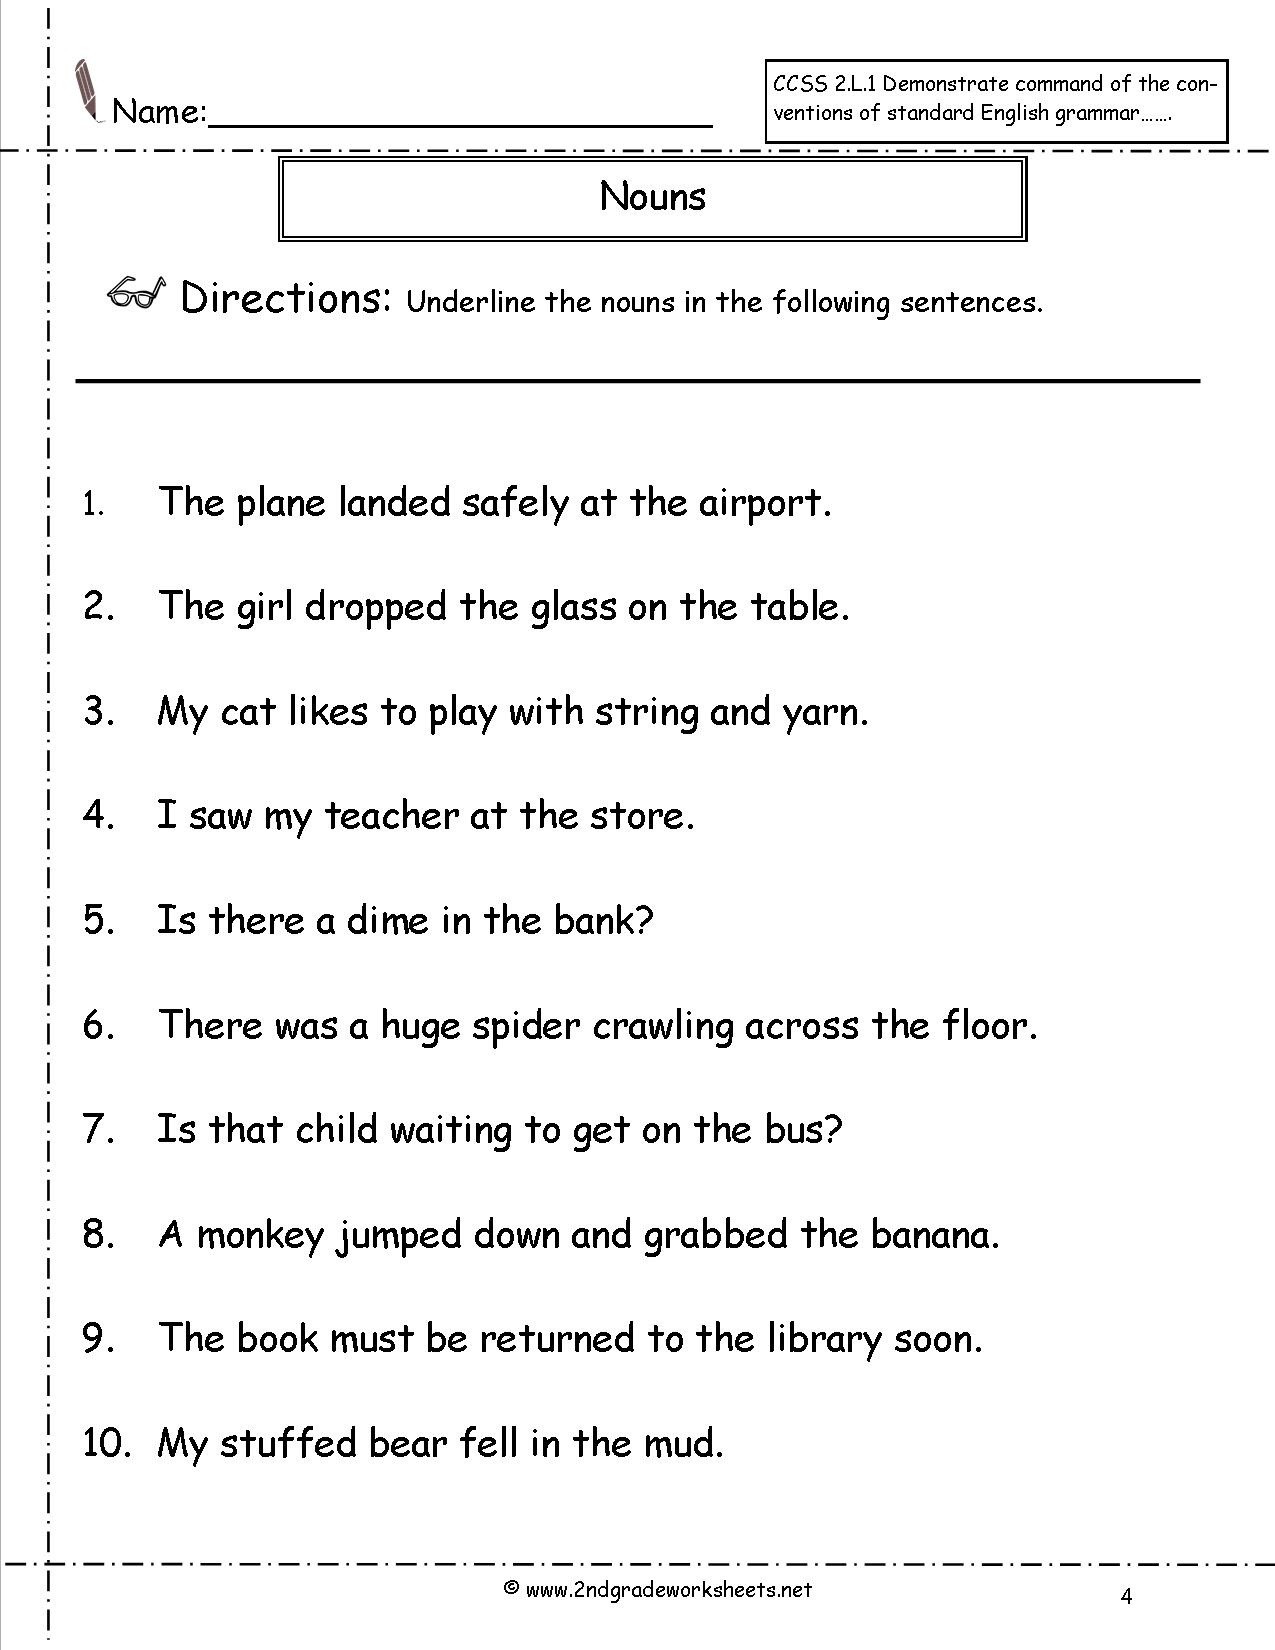 Second Grade Pronouns Worksheet Free Pronoun Worksheet for 2nd Grade